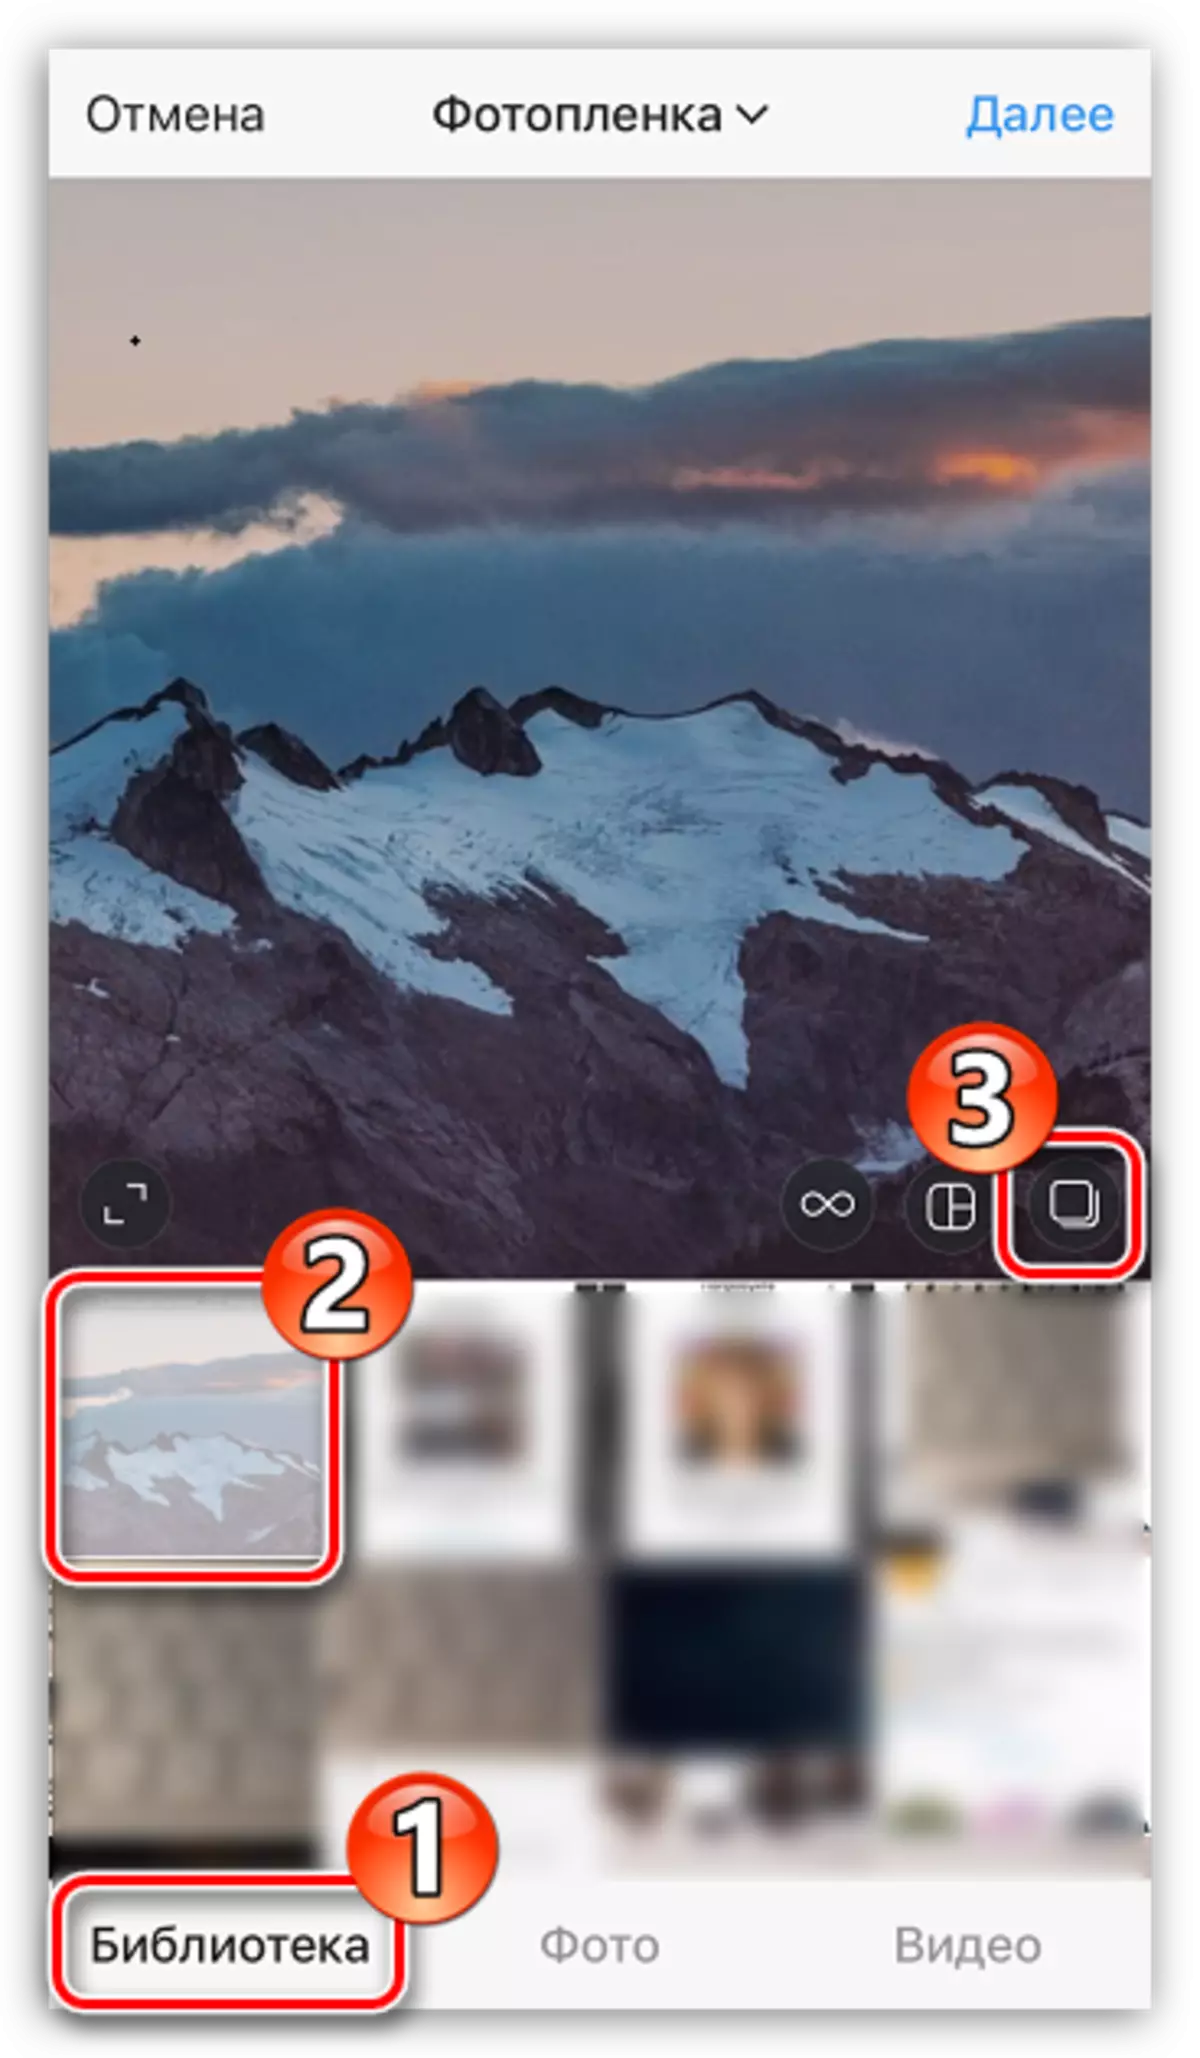 Abilitazione della funzionalità di pubblicazione di diverse immagini in Instagram